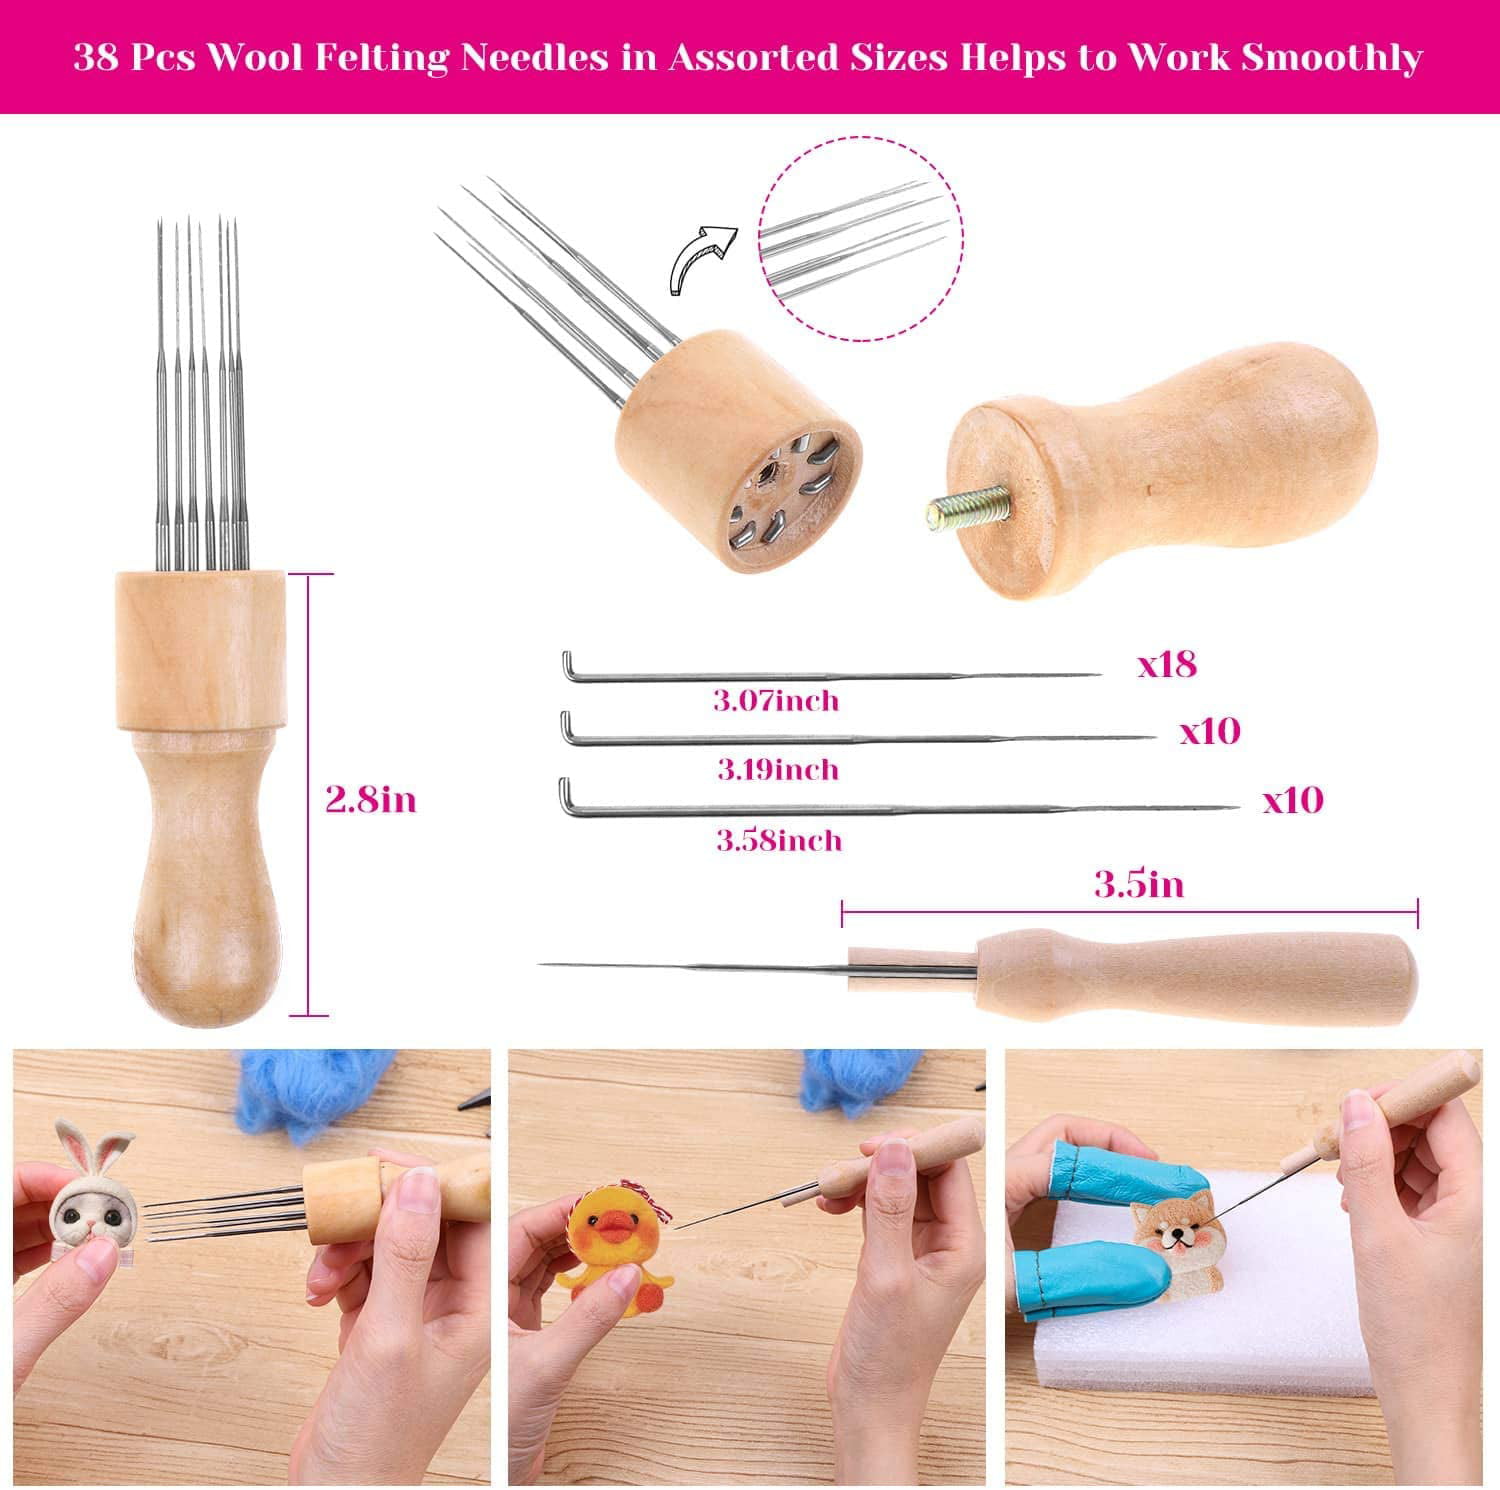 Shynek 460 Pack Needle Felting Supplies Kit Includes 50 Colors Wool Roving and Felt Needles Tools for Beginners Needle Felting Kit